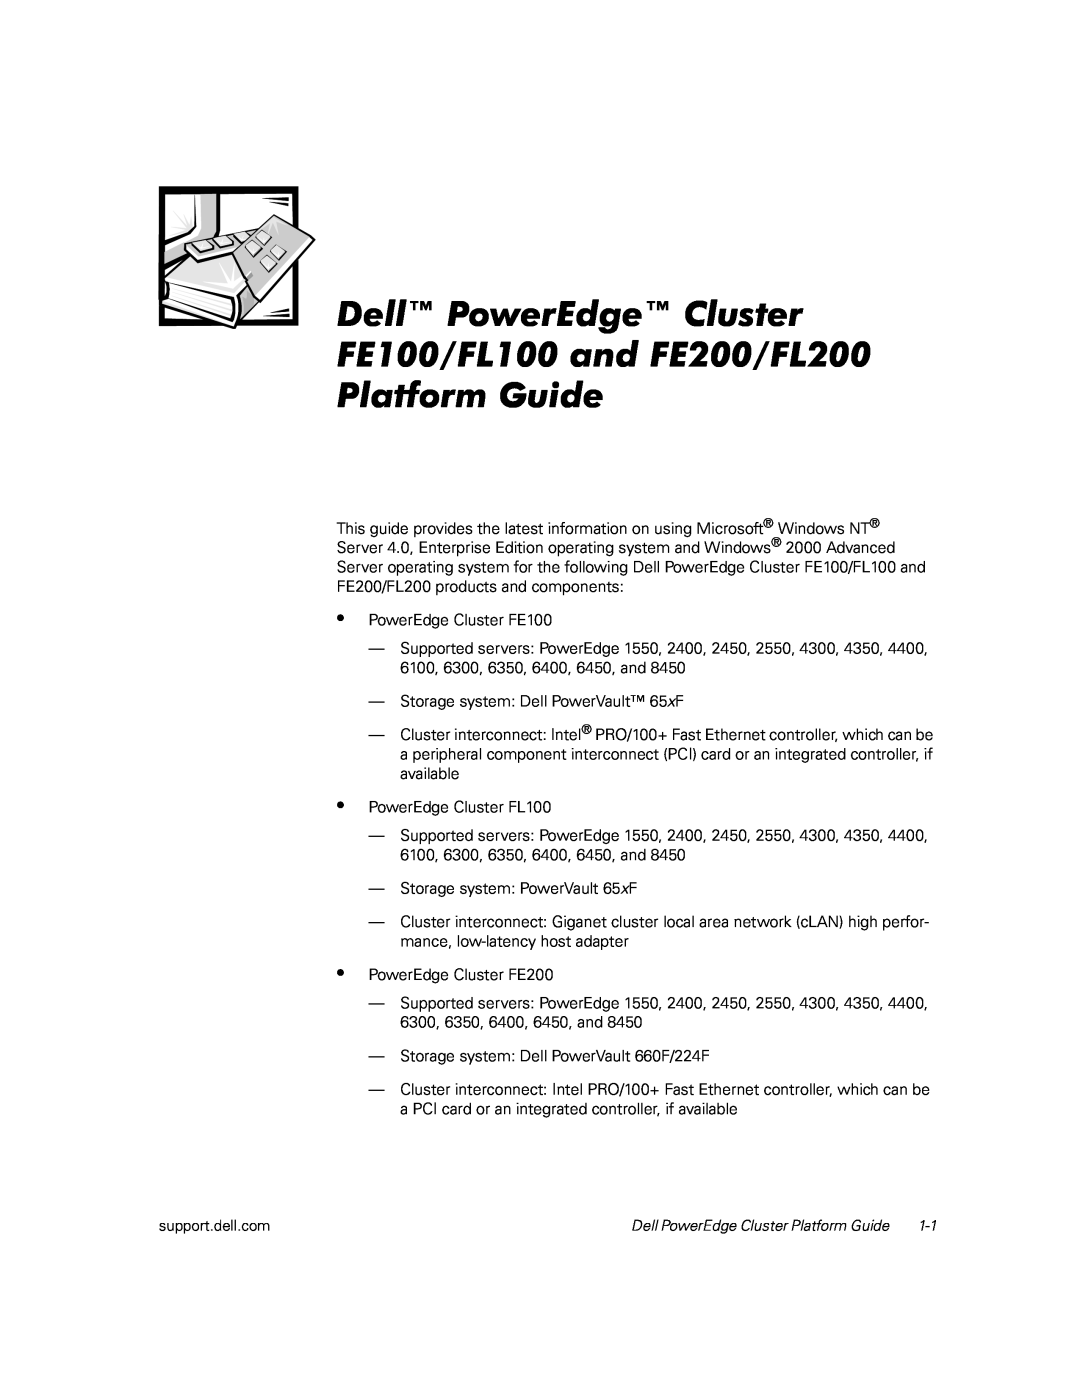 Dell manual Dell PowerEdge Cluster, FE100/FL100 and FE200/FL200 Platform Guide, • • • 